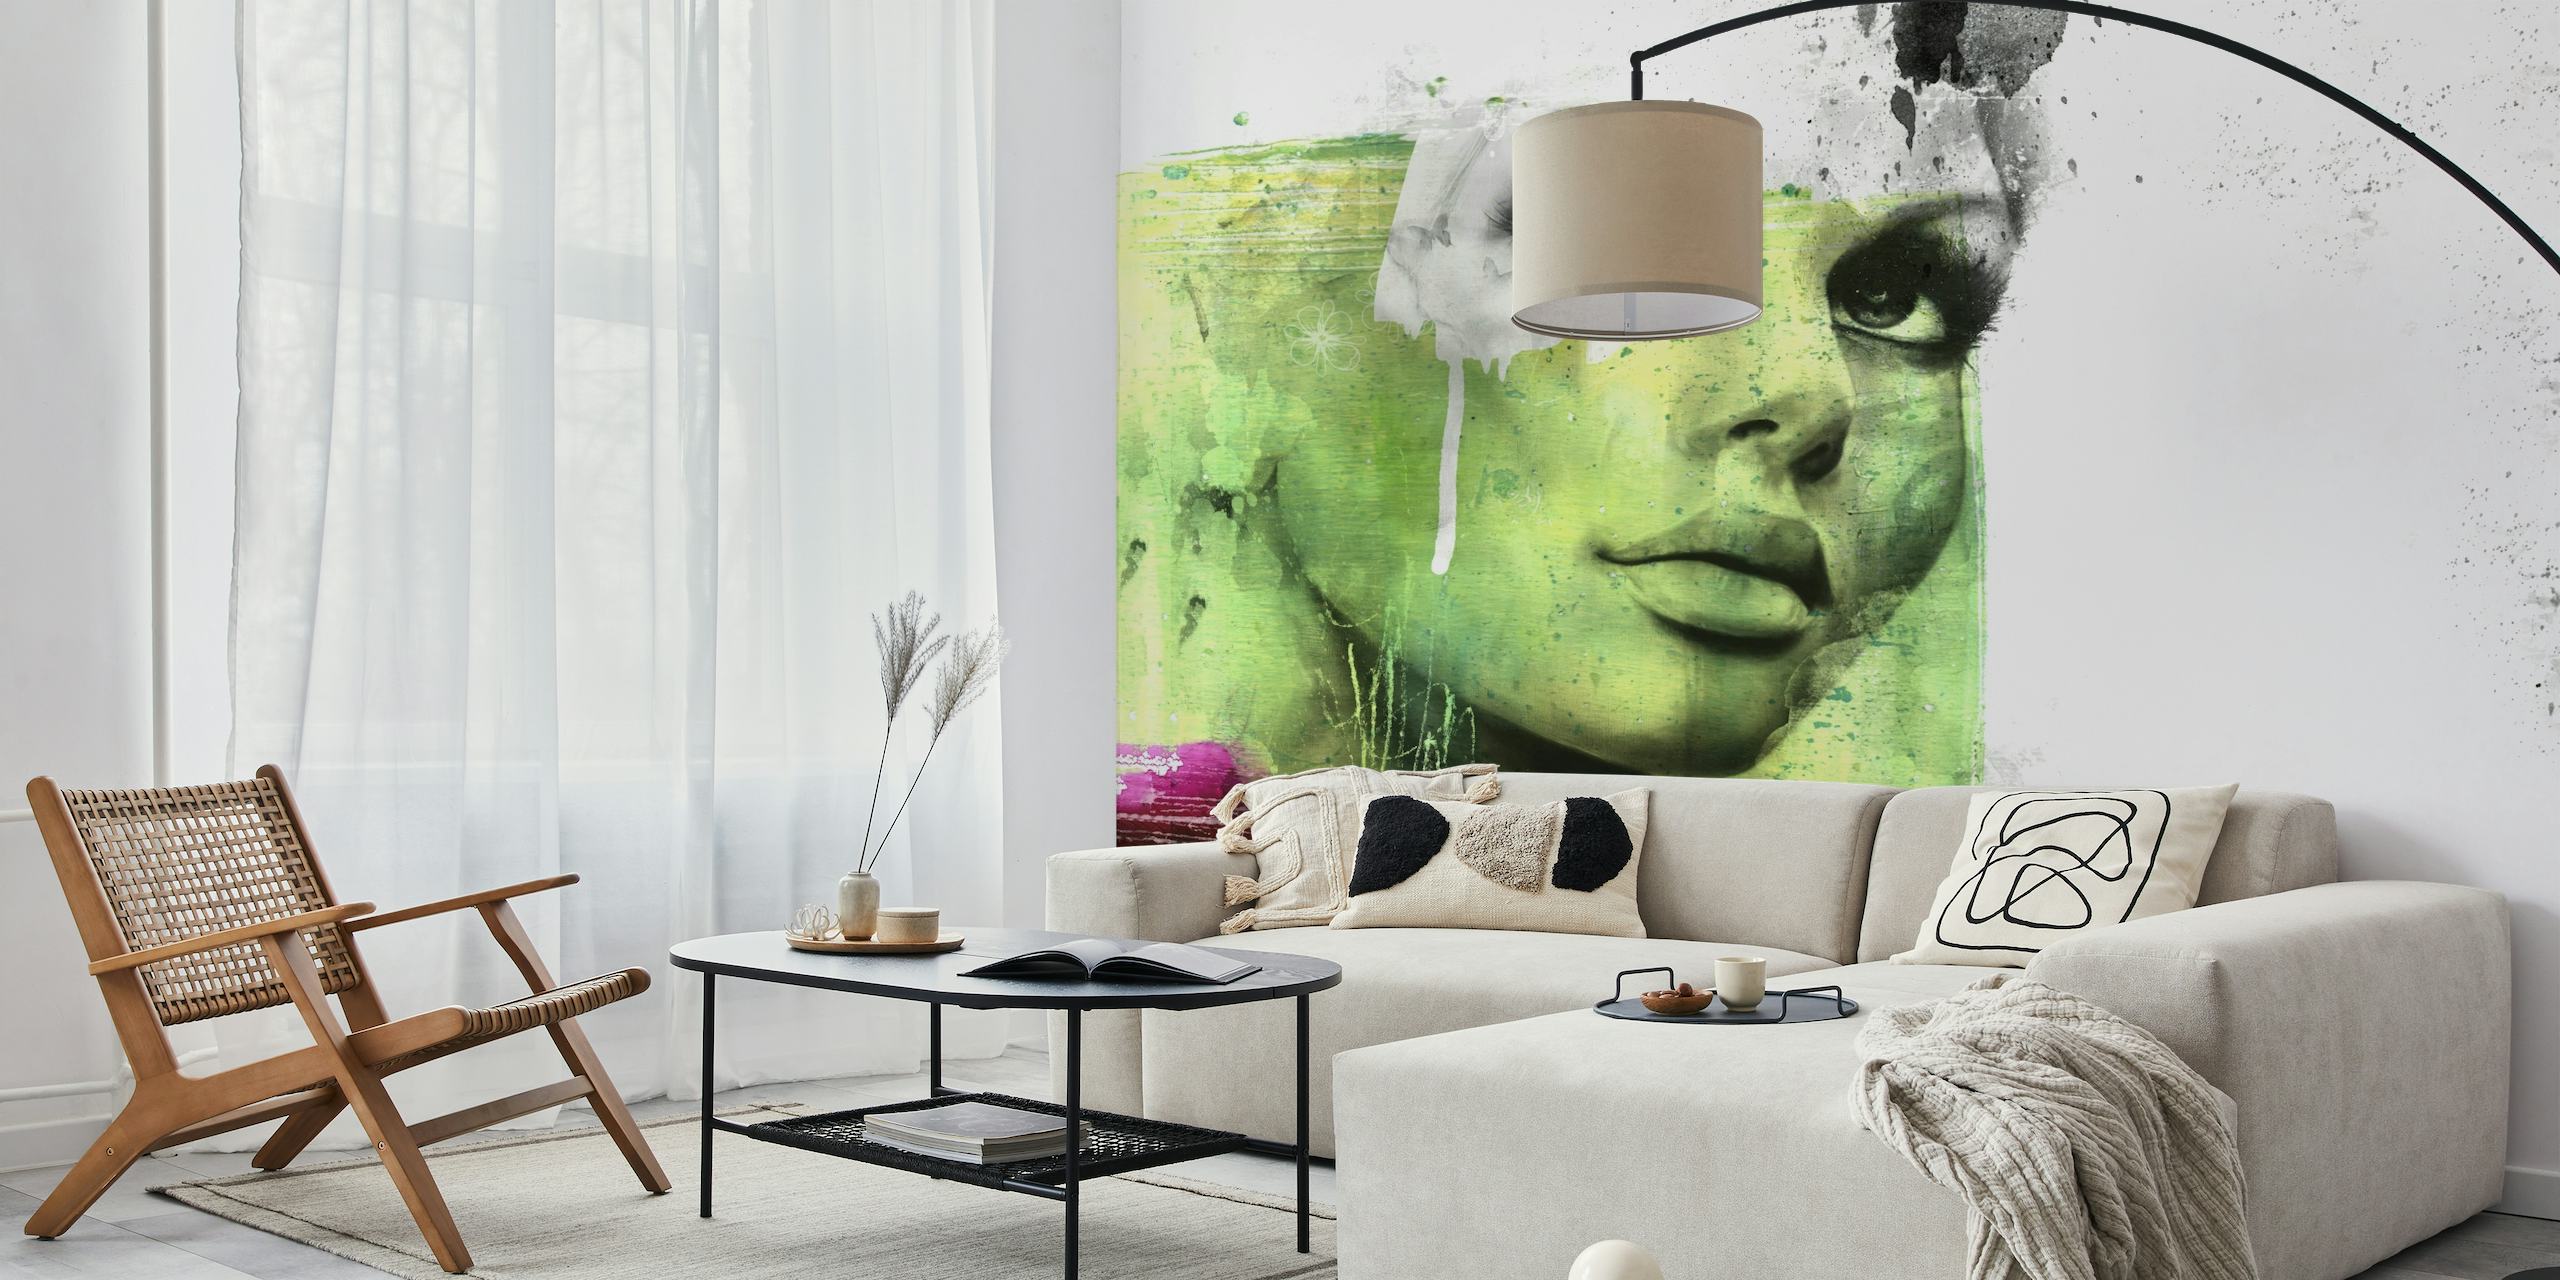 Fotomural vinílico de parede retrato feminino flash verde com design abstrato e cores vivas